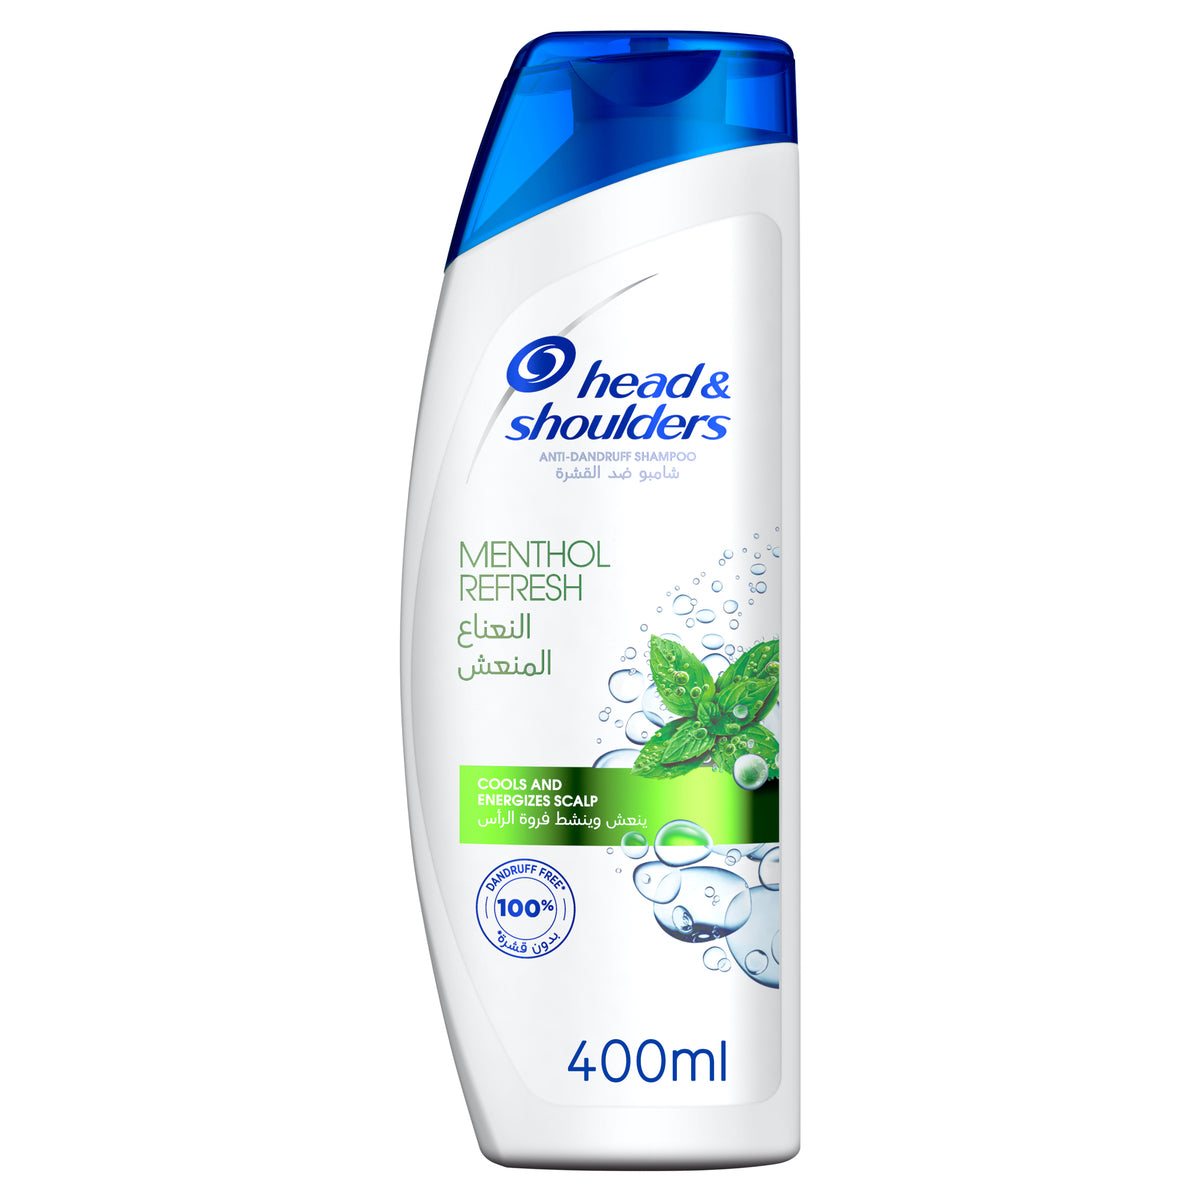 Heads & Shoulders shampoo Menthol Refresh 400ml